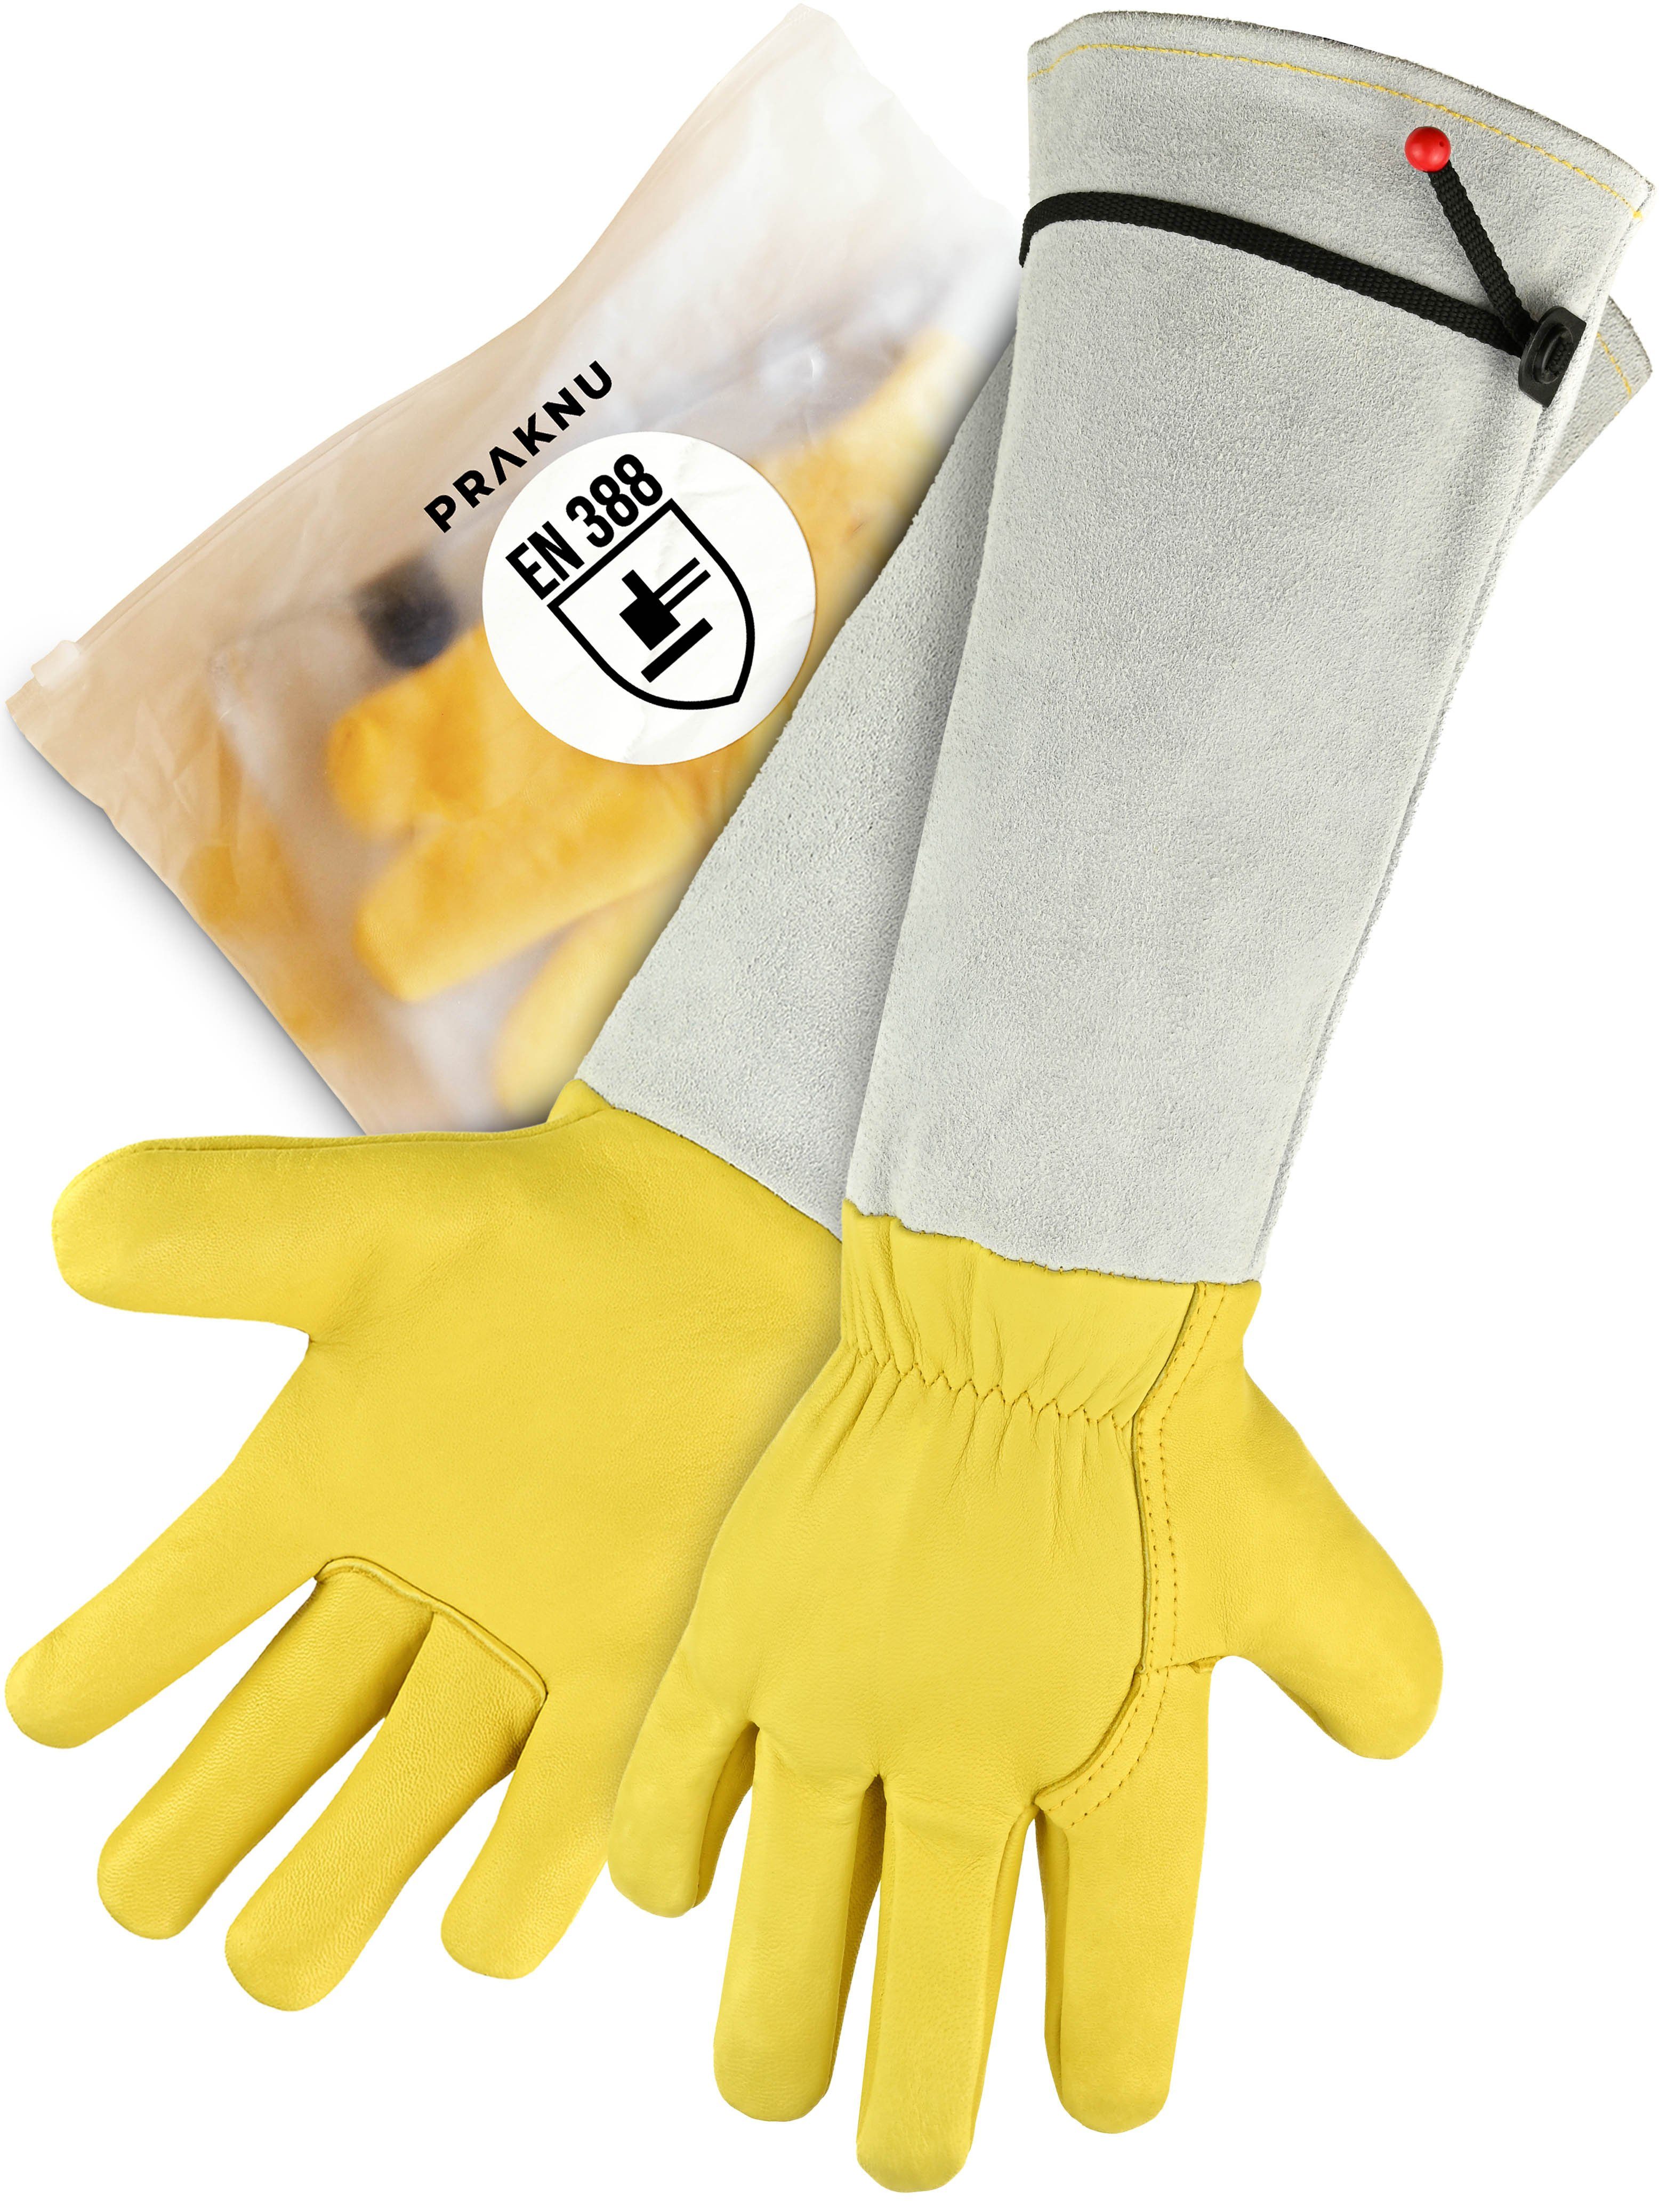 Praknu Садові рукавички Praknu Rosenhandschuhe Dornenfest M (Packung) EN 388 Zertifiziert - Verstellbare Manschetten - Leder